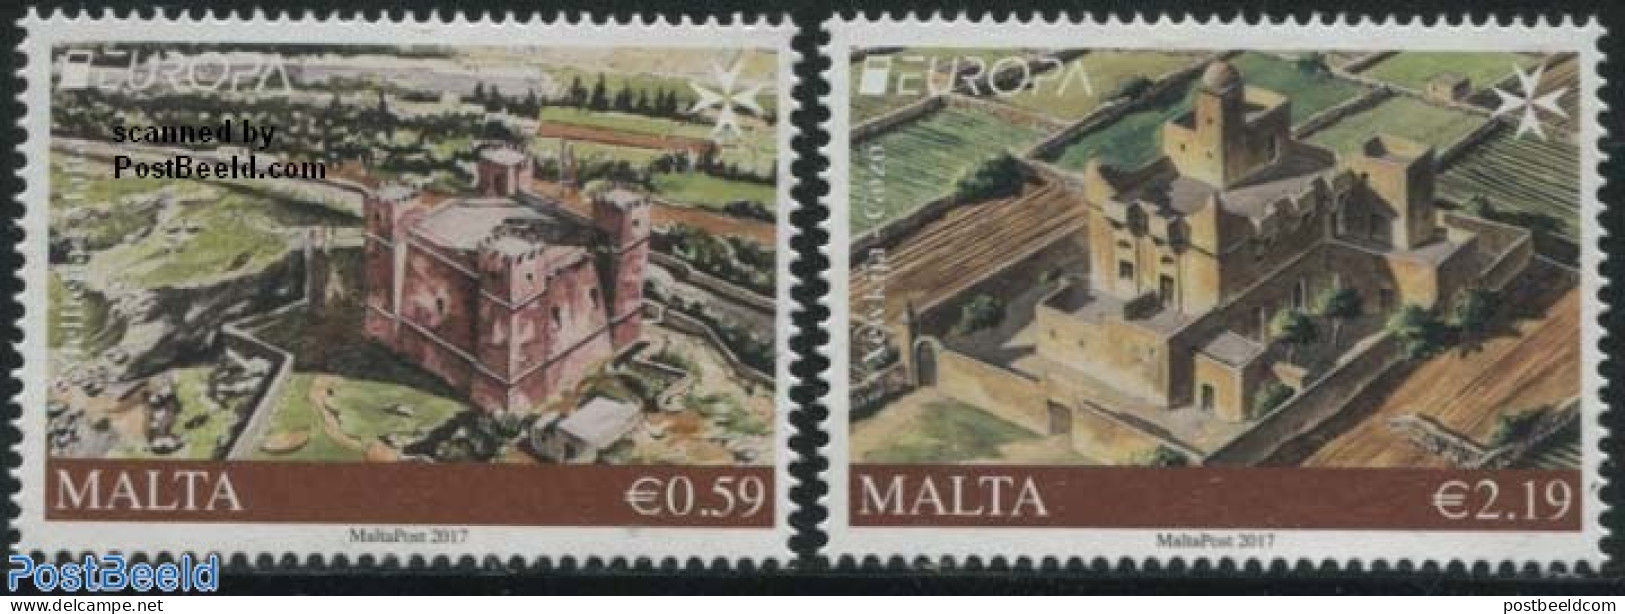 Malta 2017 Europa, Castles 2v, Mint NH, History - Europa (cept) - Art - Castles & Fortifications - Castles